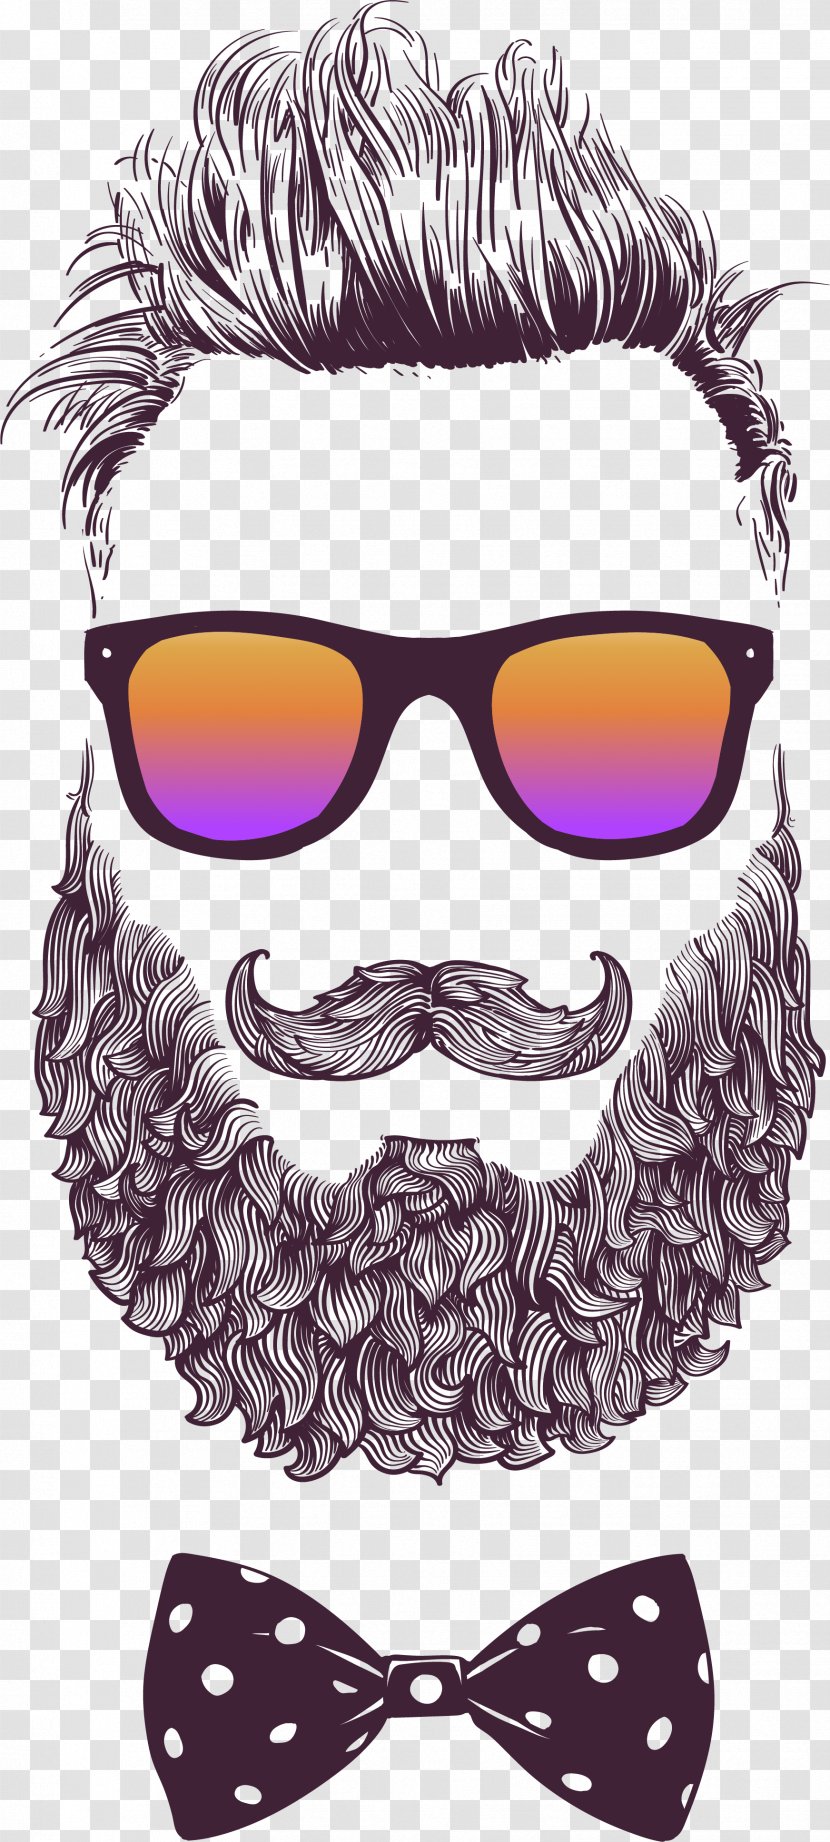 Royalty-free Illustration - Cartoon - Vector Male Fashion Sunglasses Transparent PNG